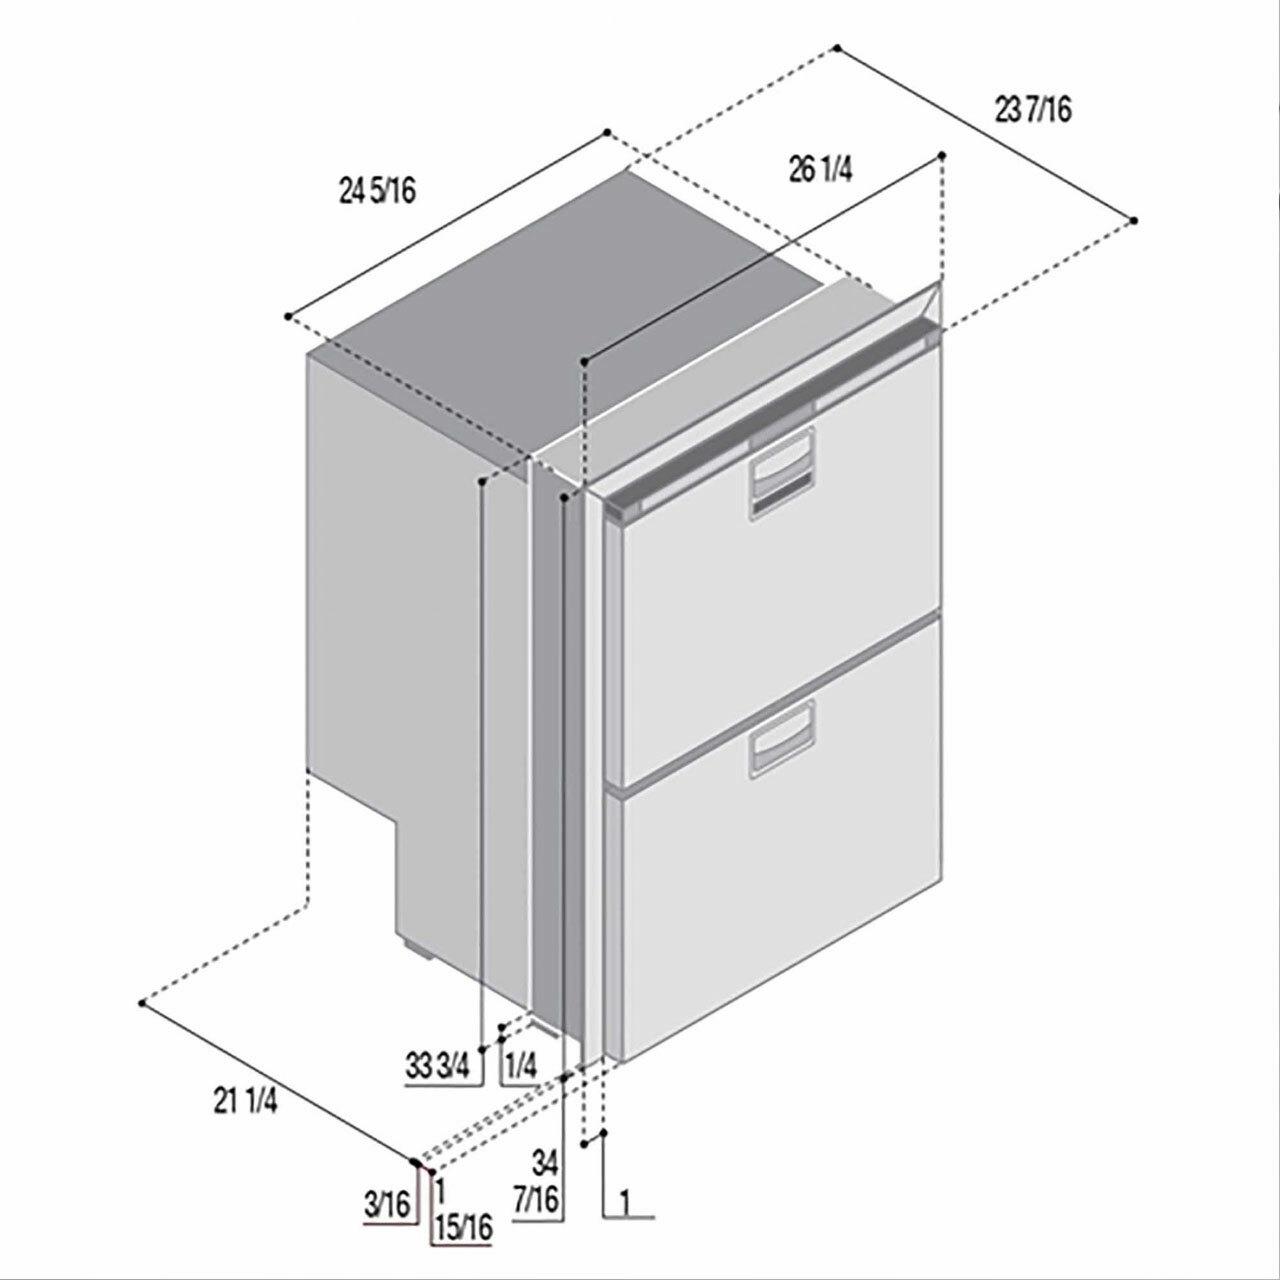 Vitrifrigo Stainless Steel Double Drawer Refrigerator/Freezer DRW180A